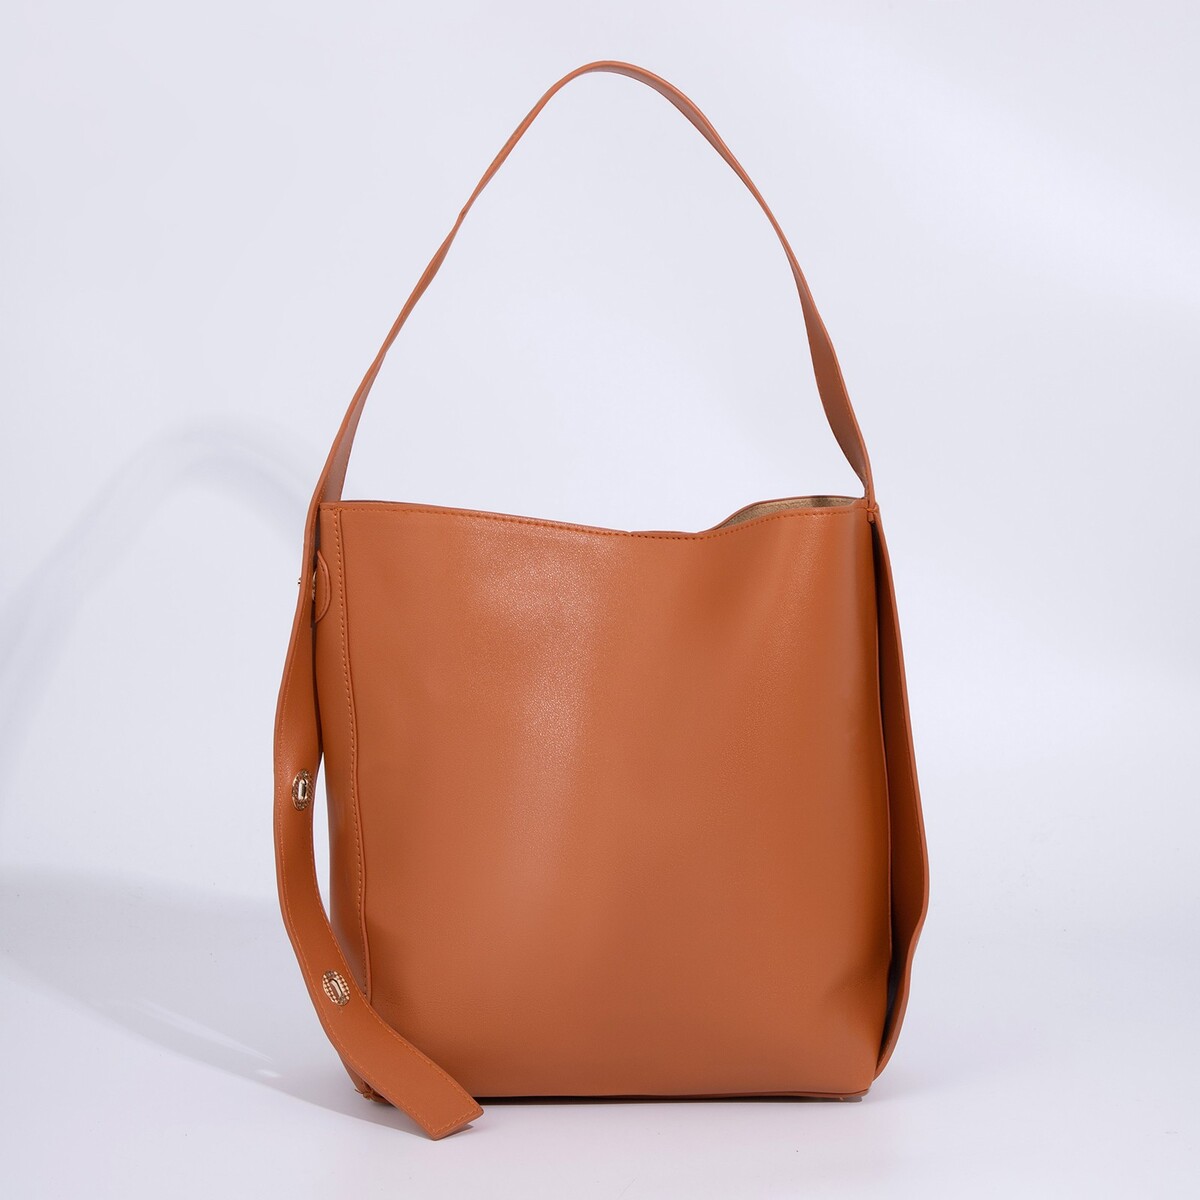 Сумка-мешок на магните, цвет коричневый сумка мешок на магните коричневый